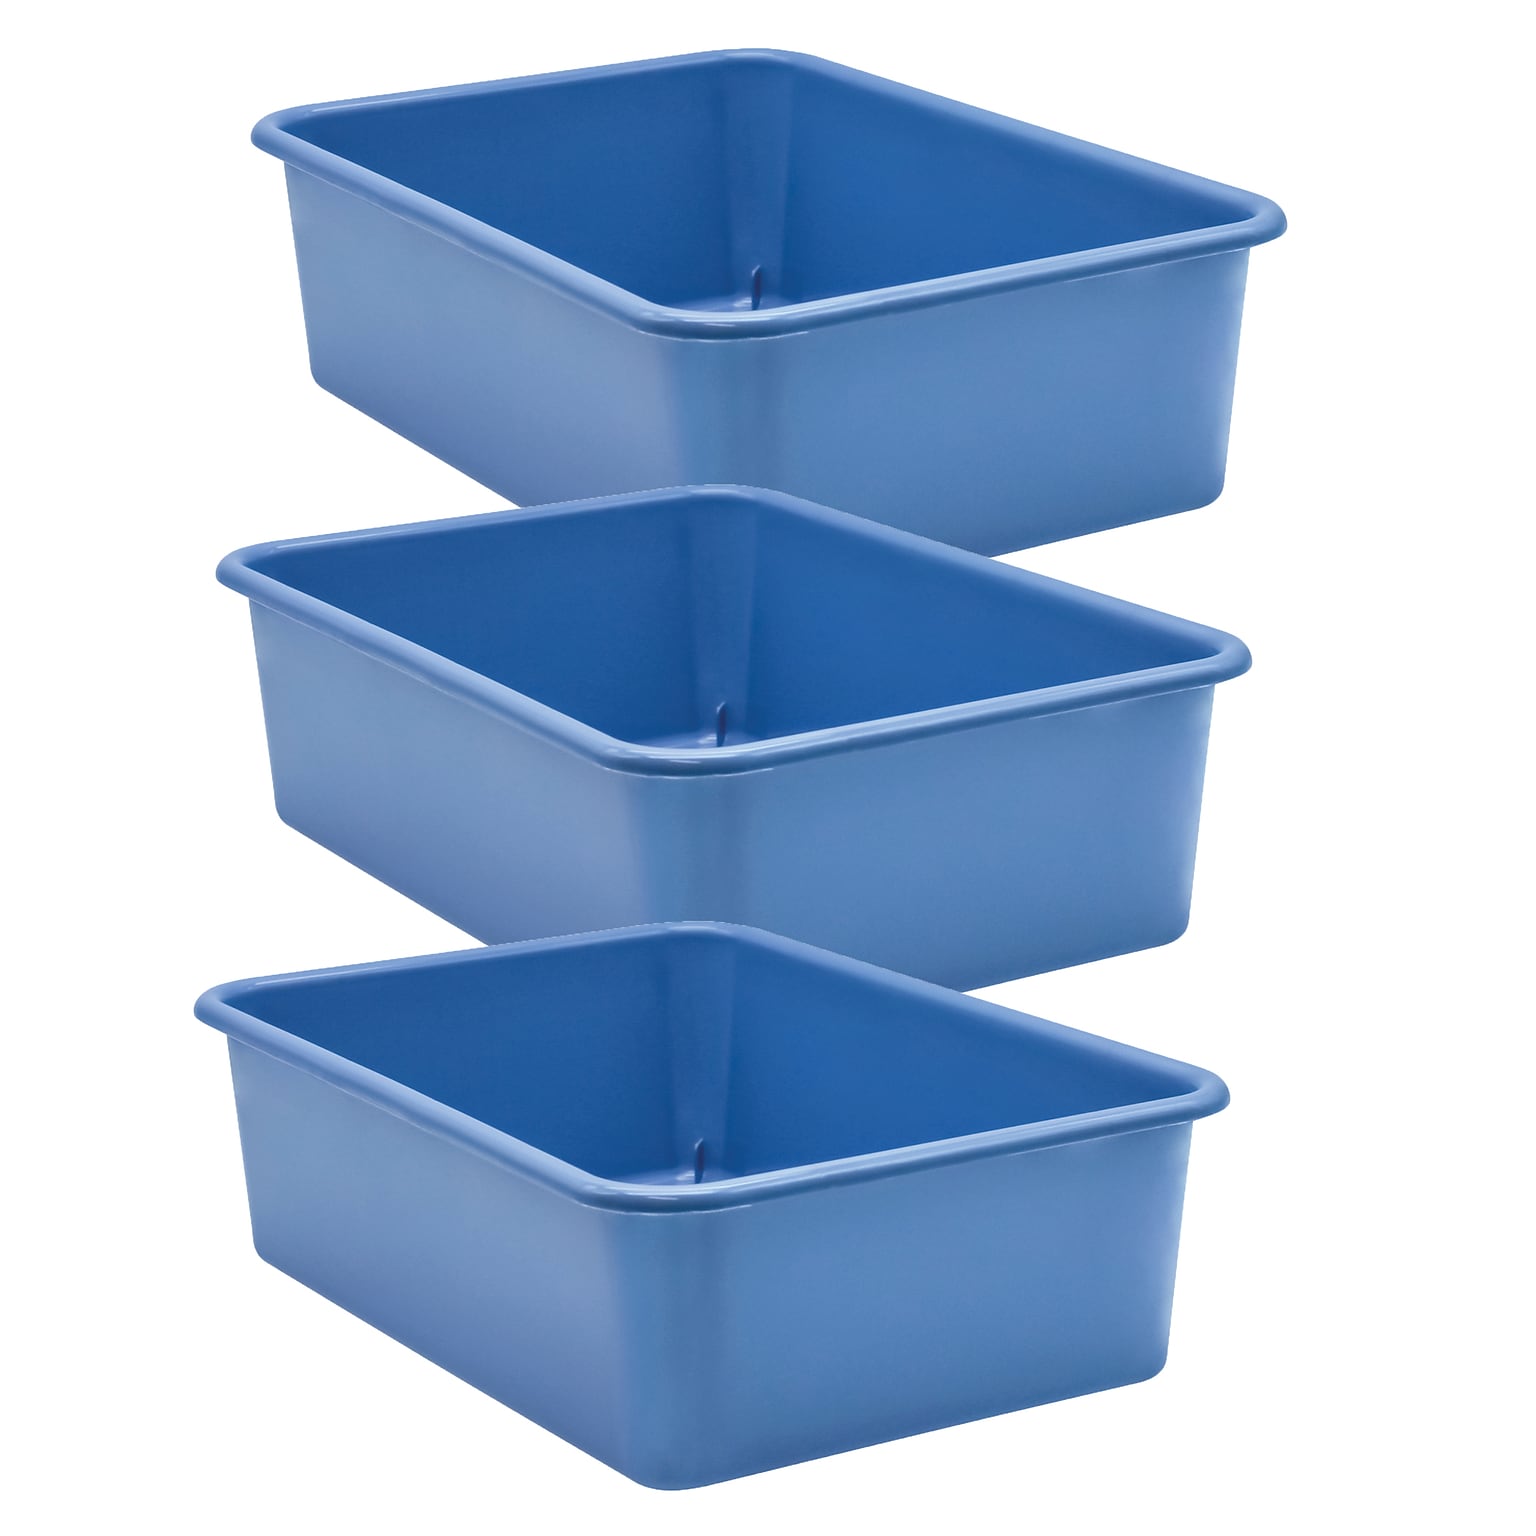 Teacher Created Resources® Plastic Storage Bin, Large, 16.25 x 11.5 x 5, Slate Blue, Pack of 3 (TCR20415-3)